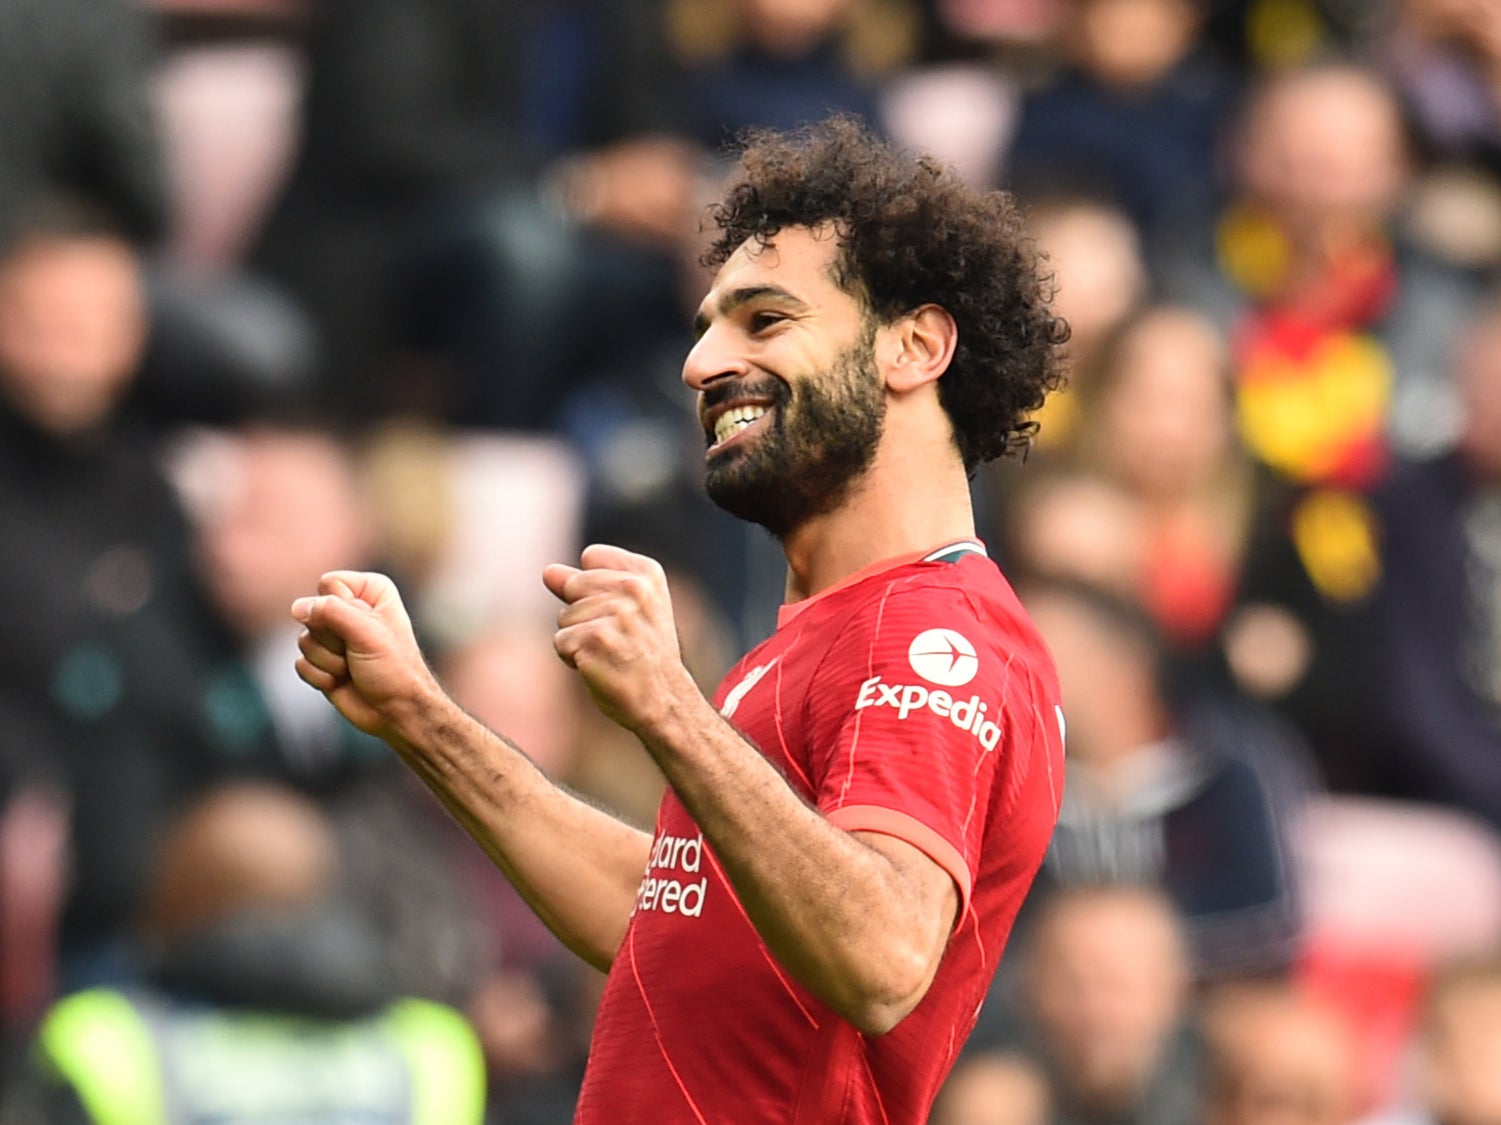 Mohamed Salah starred in Liverpool’s dominant win at Watford